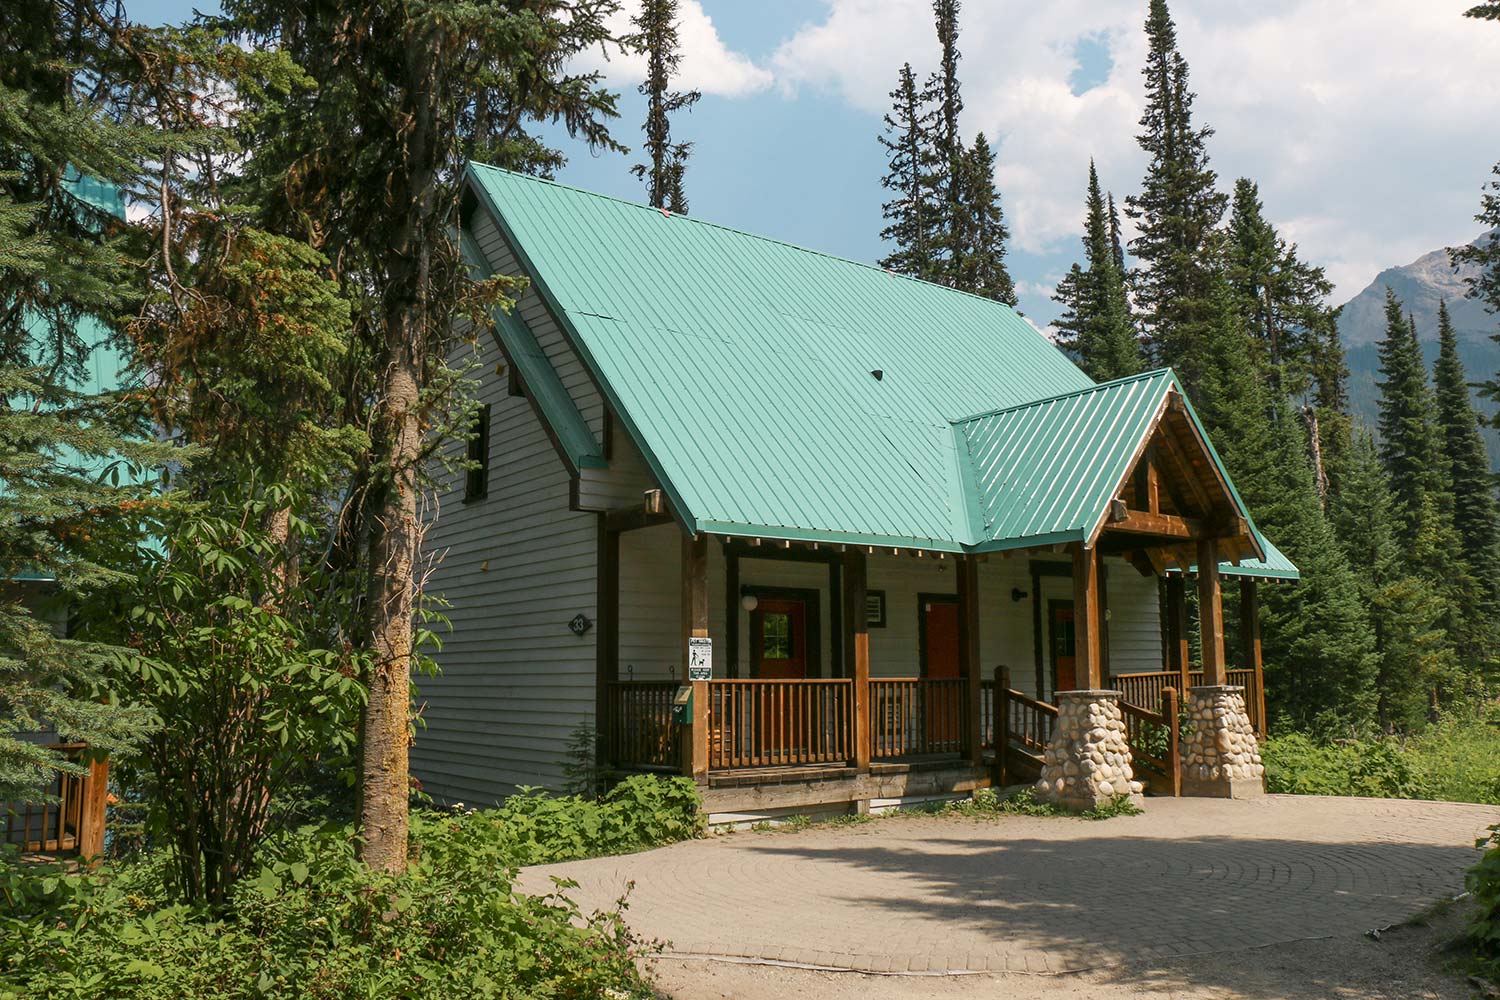 Lodge du lac Émeraude, Parc National Yoho, Rocheuses canadiennes, Canada / Emerald Lake Lodge, Yoho National Park, Canadian Rockies, Canada